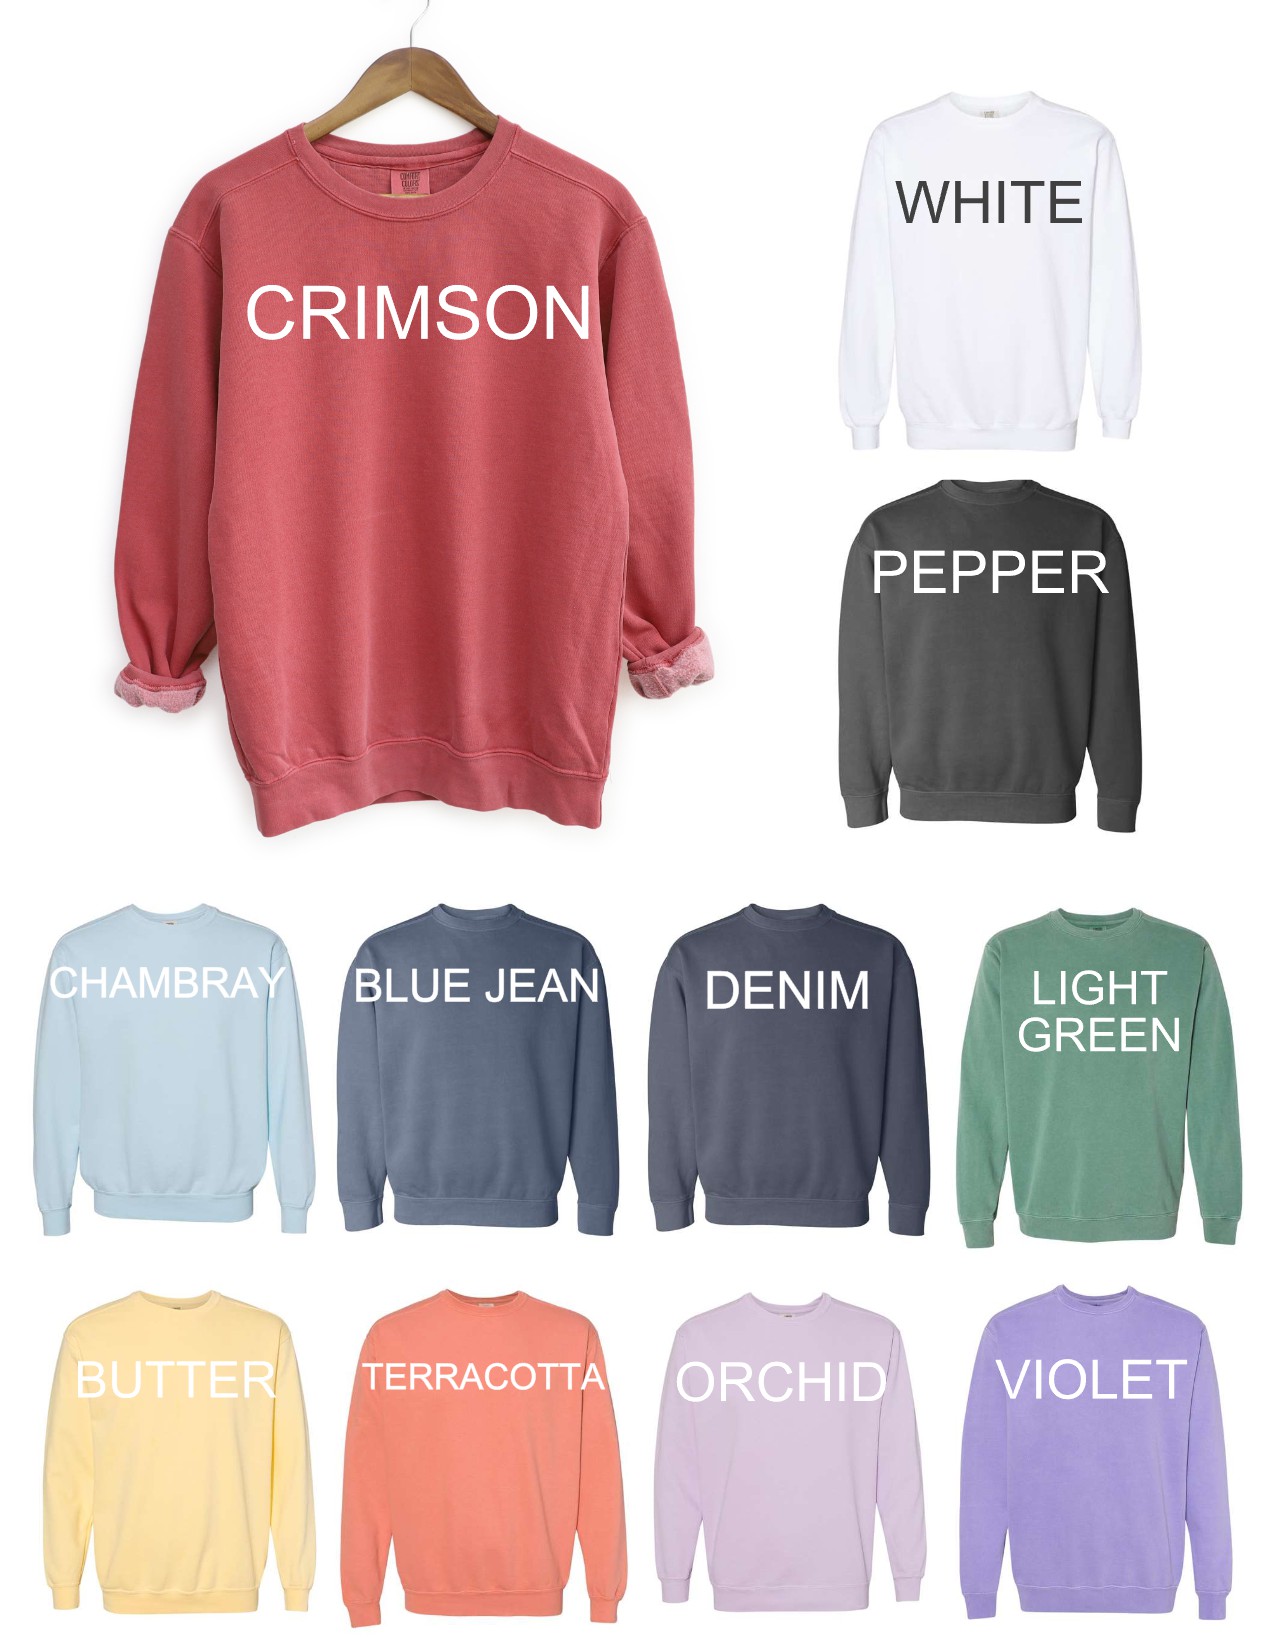 SENIOR 2023' Comfort Colors Sweatshirt